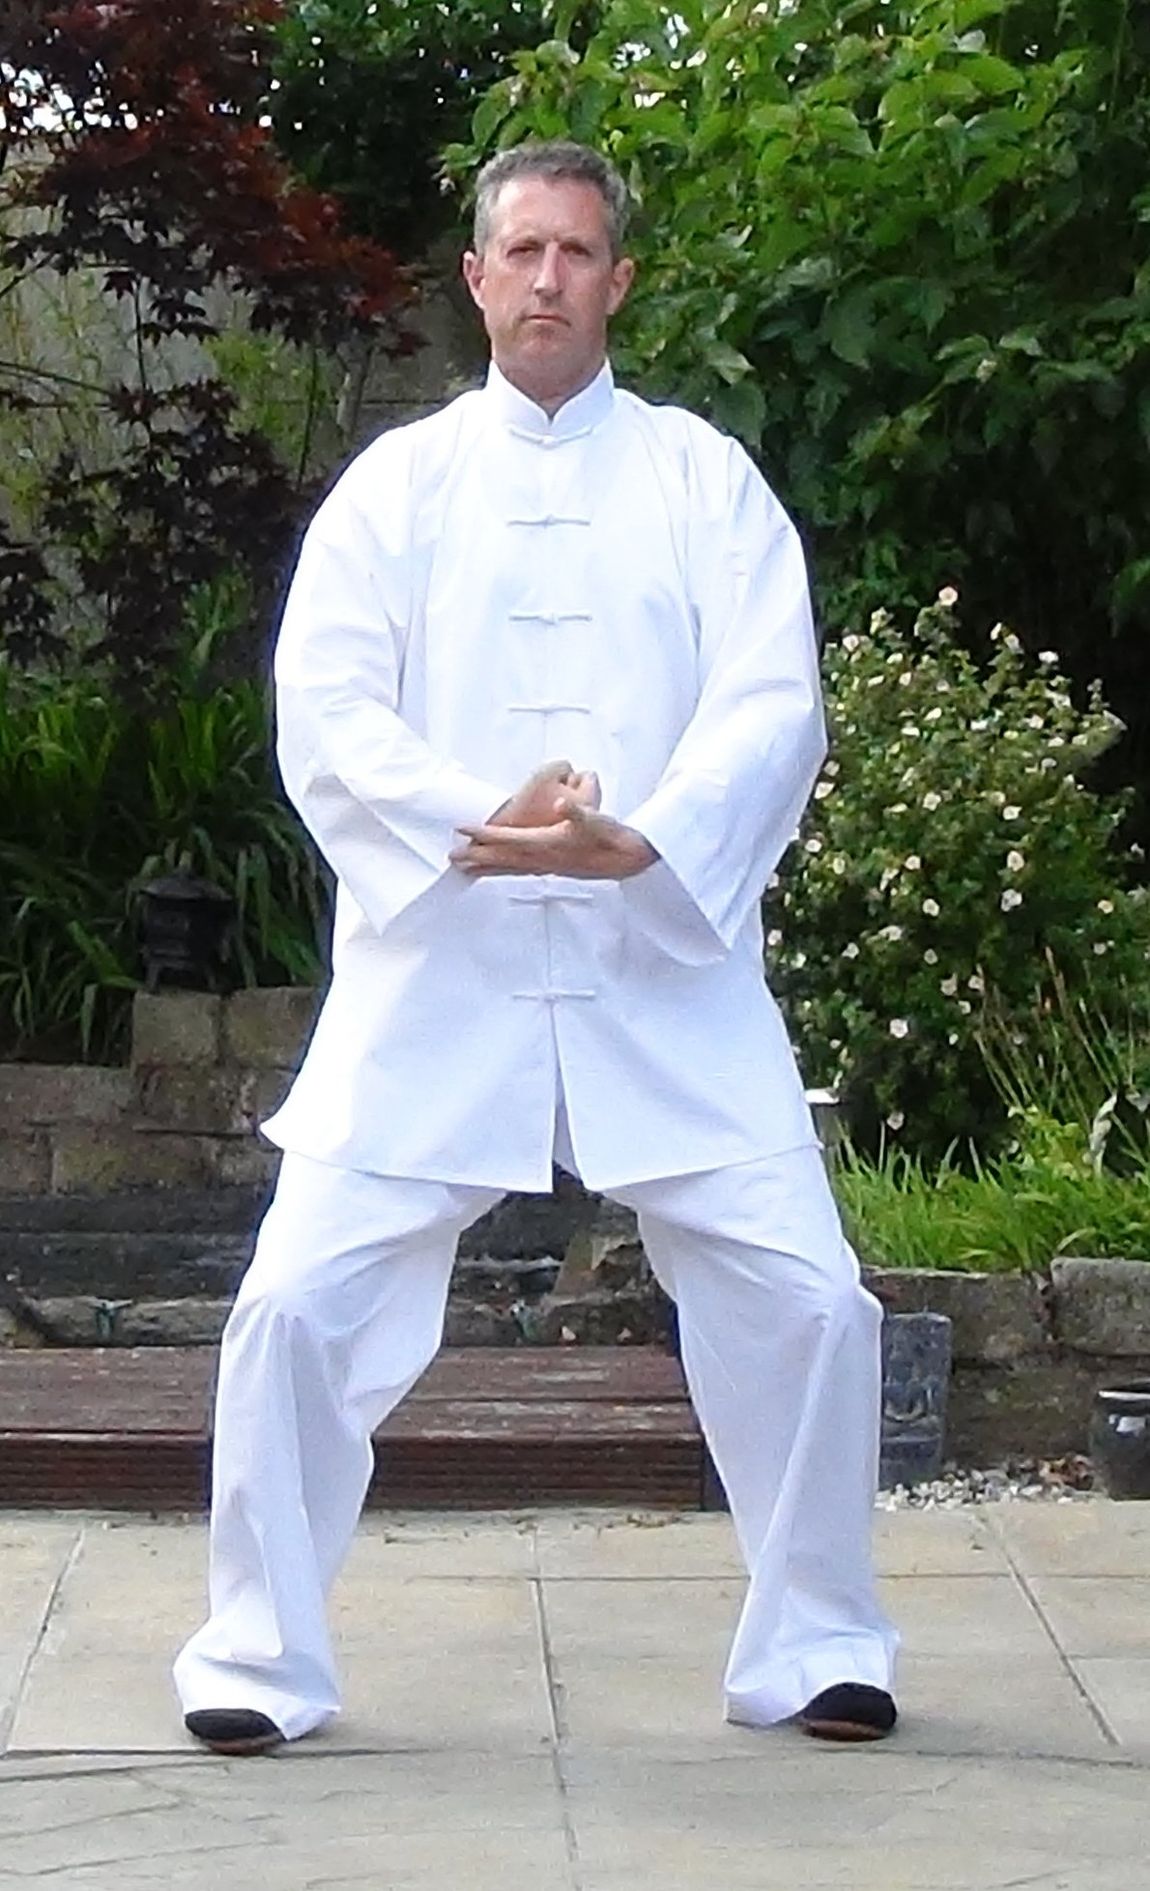 Chen Tai Chi Chuan, Chinese internal martial art